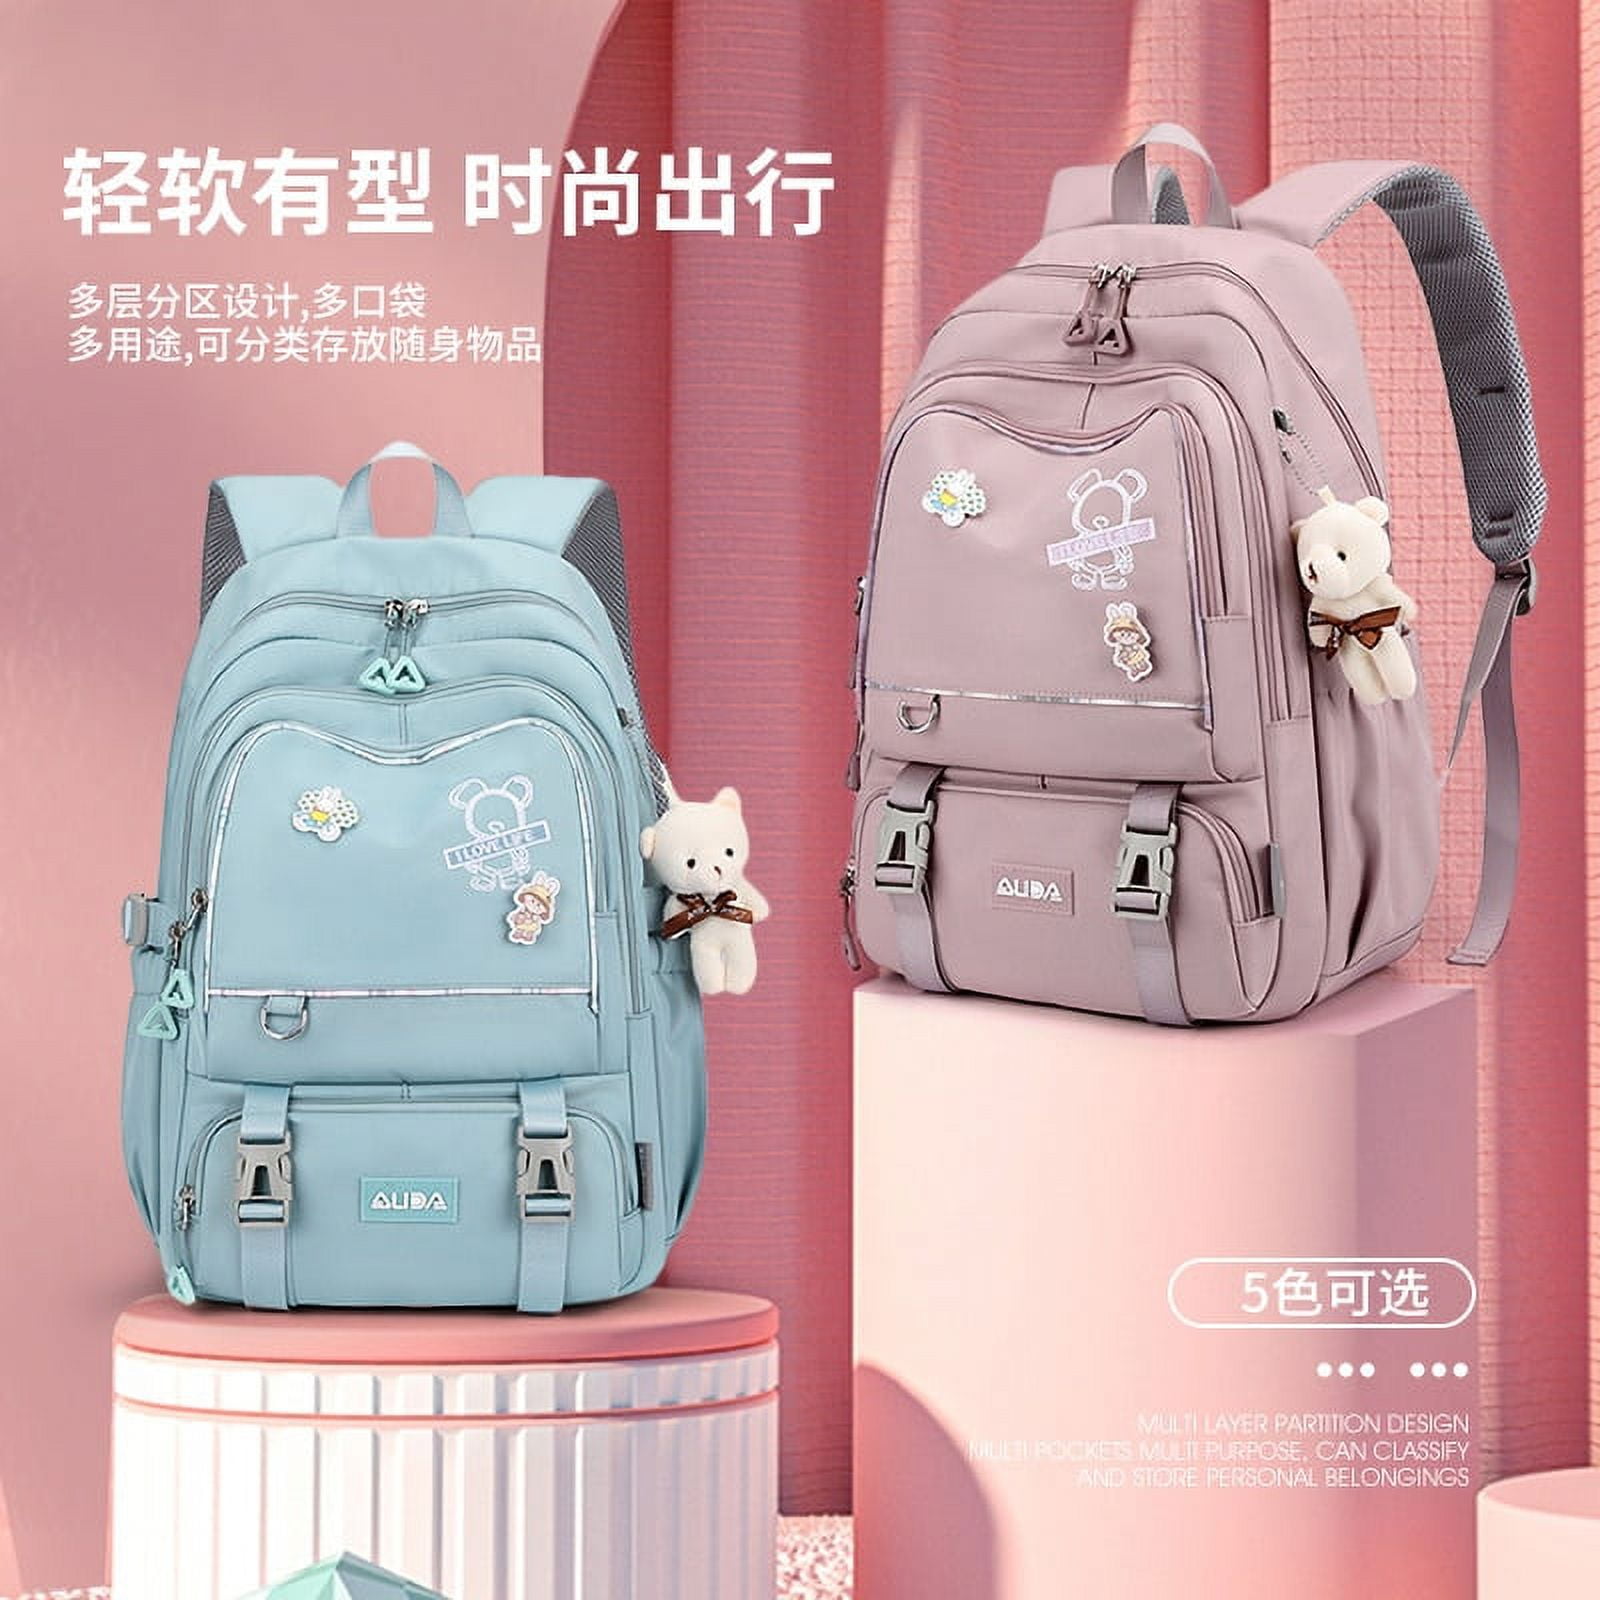 Cocopeaunts New Hot Selling Small Female Multi-Pocket Travel Bagpack Schoolbag for Teenage Girl Boy Knapsack Mochila, Adult Unisex, Size: with Rabbit